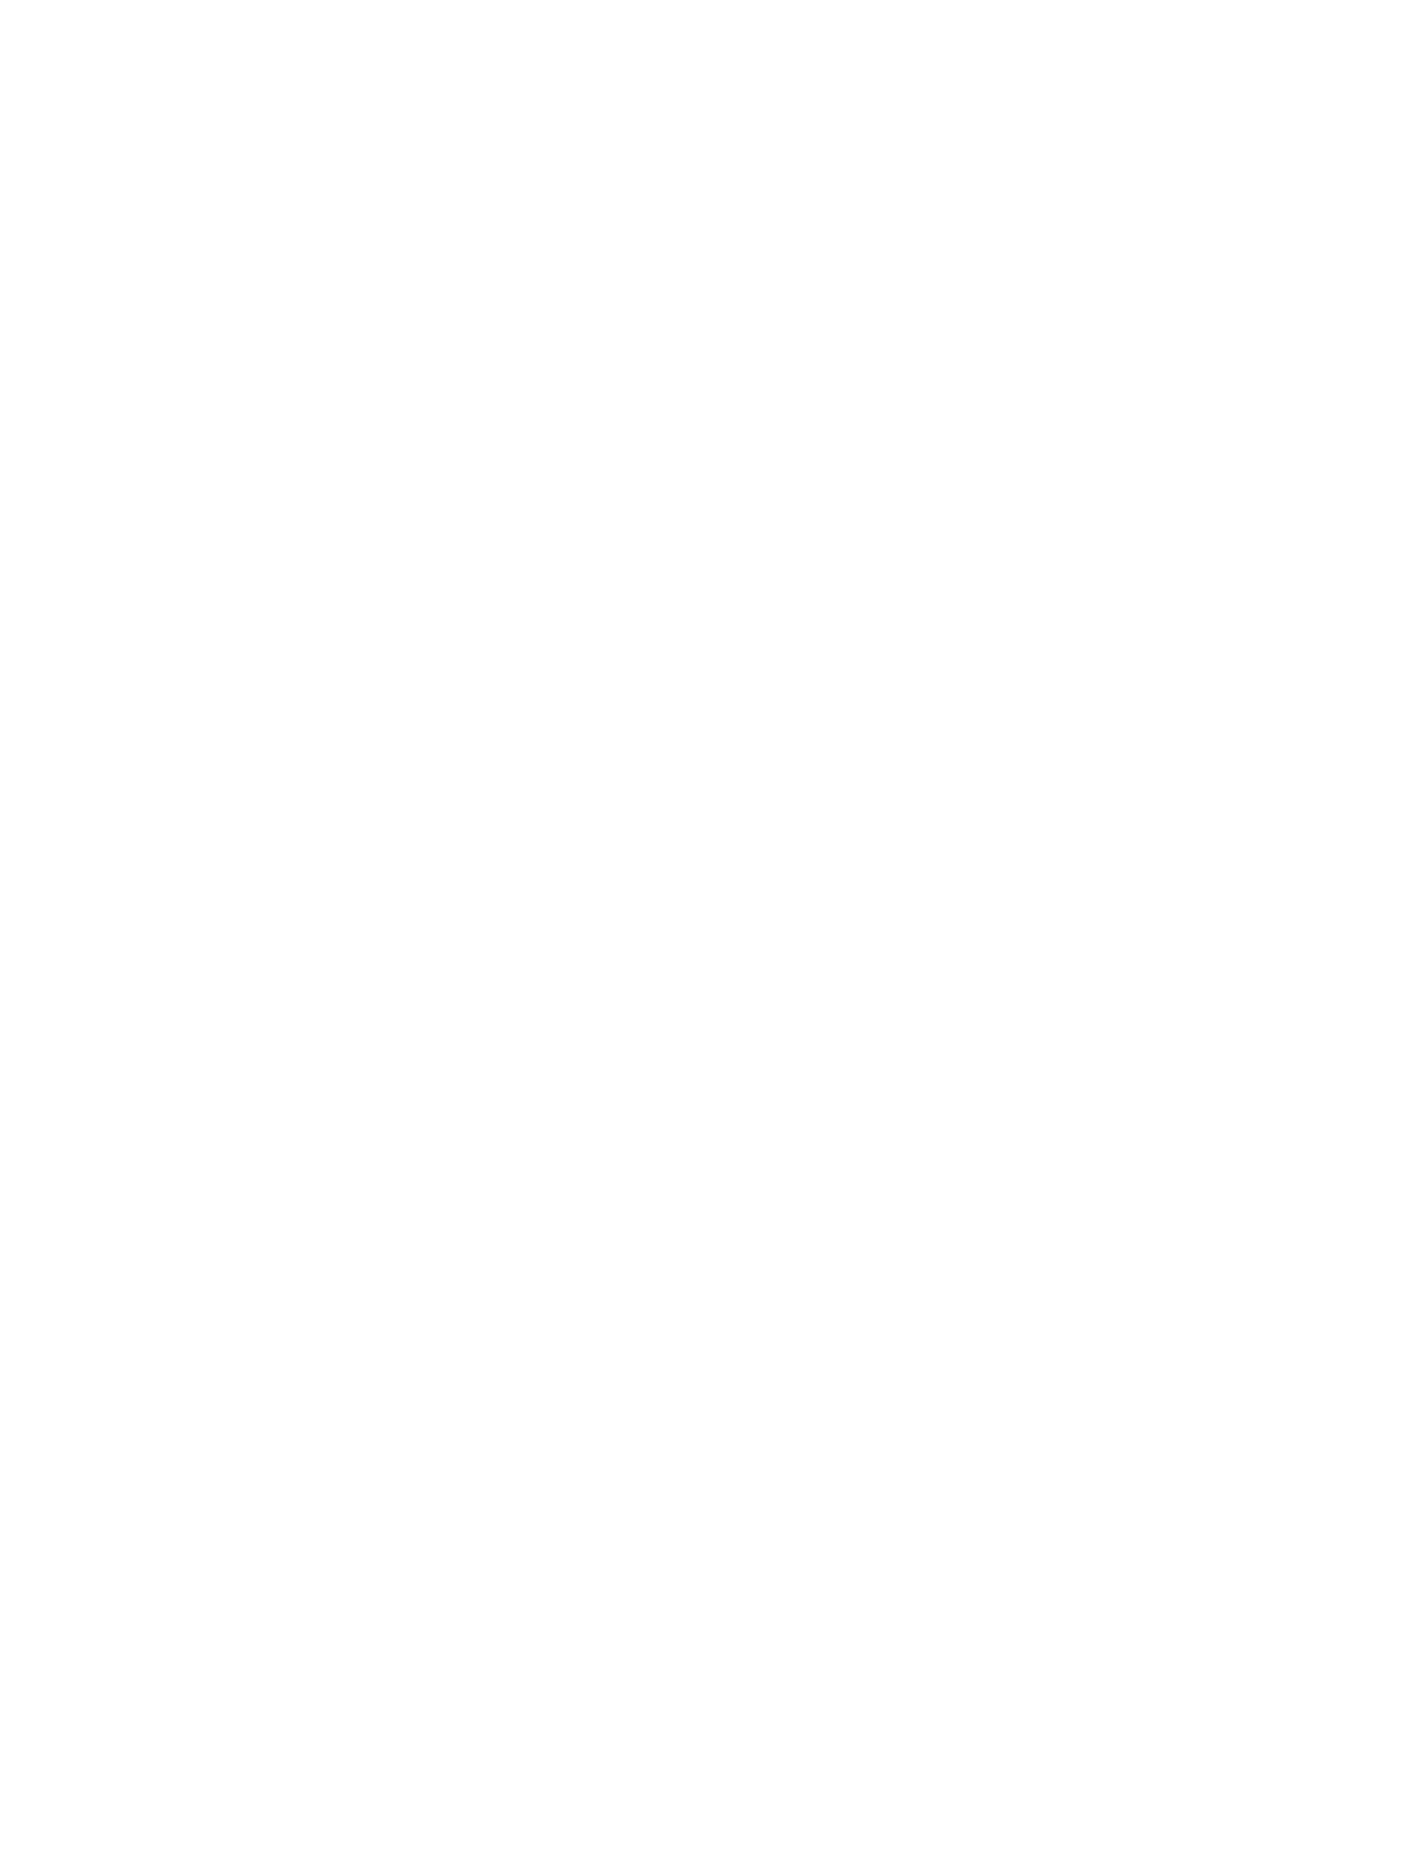 MEETING TOM CRUISE 